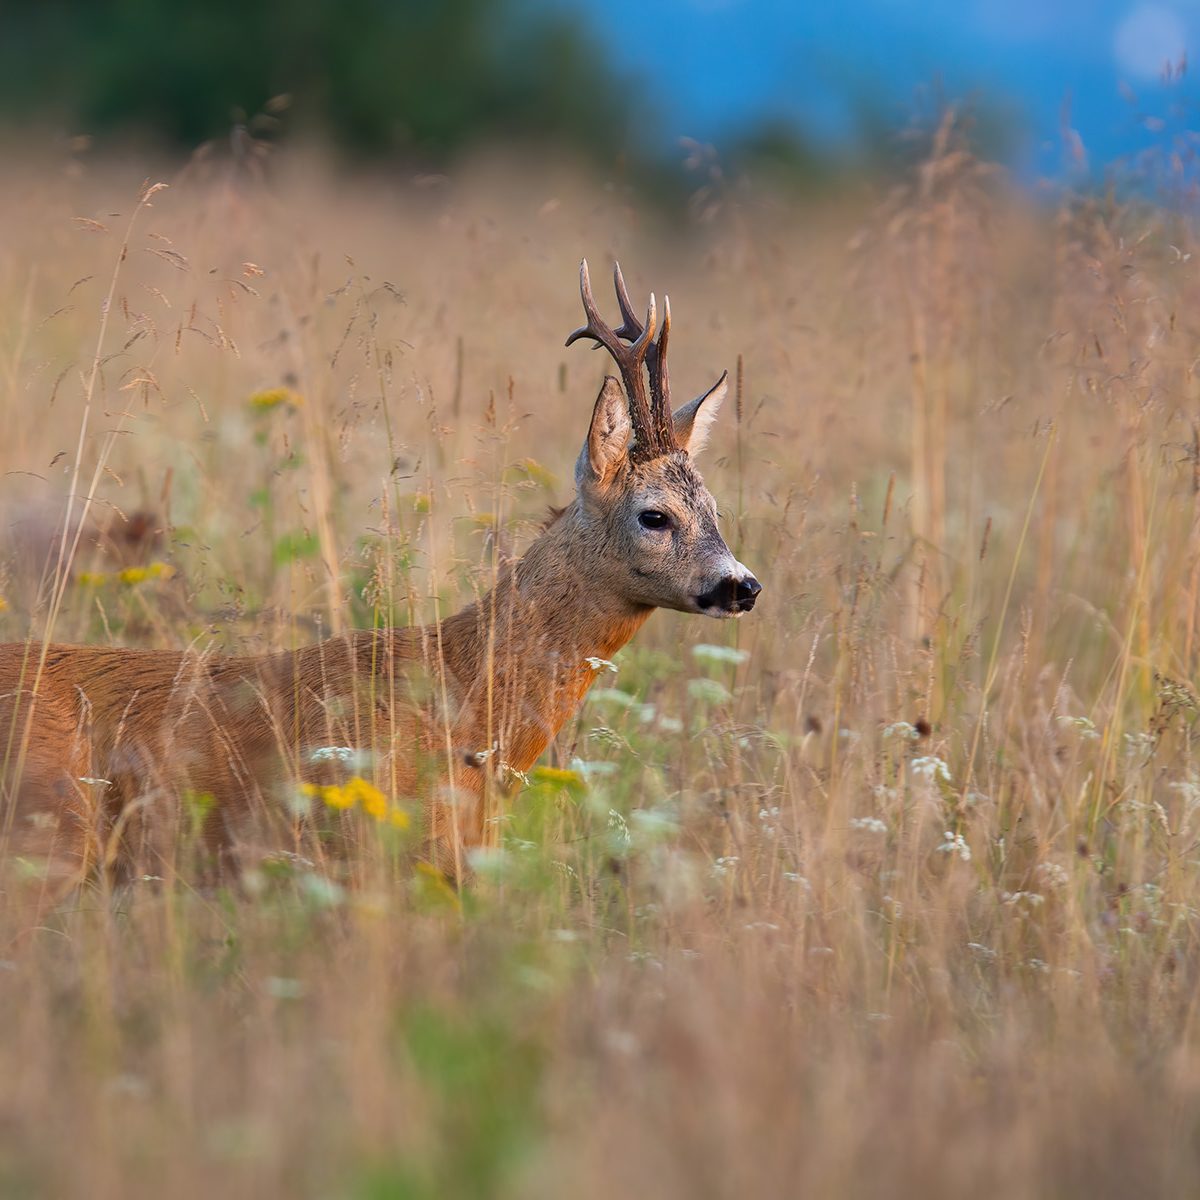 Roe deer walking in tall grass in summer nature